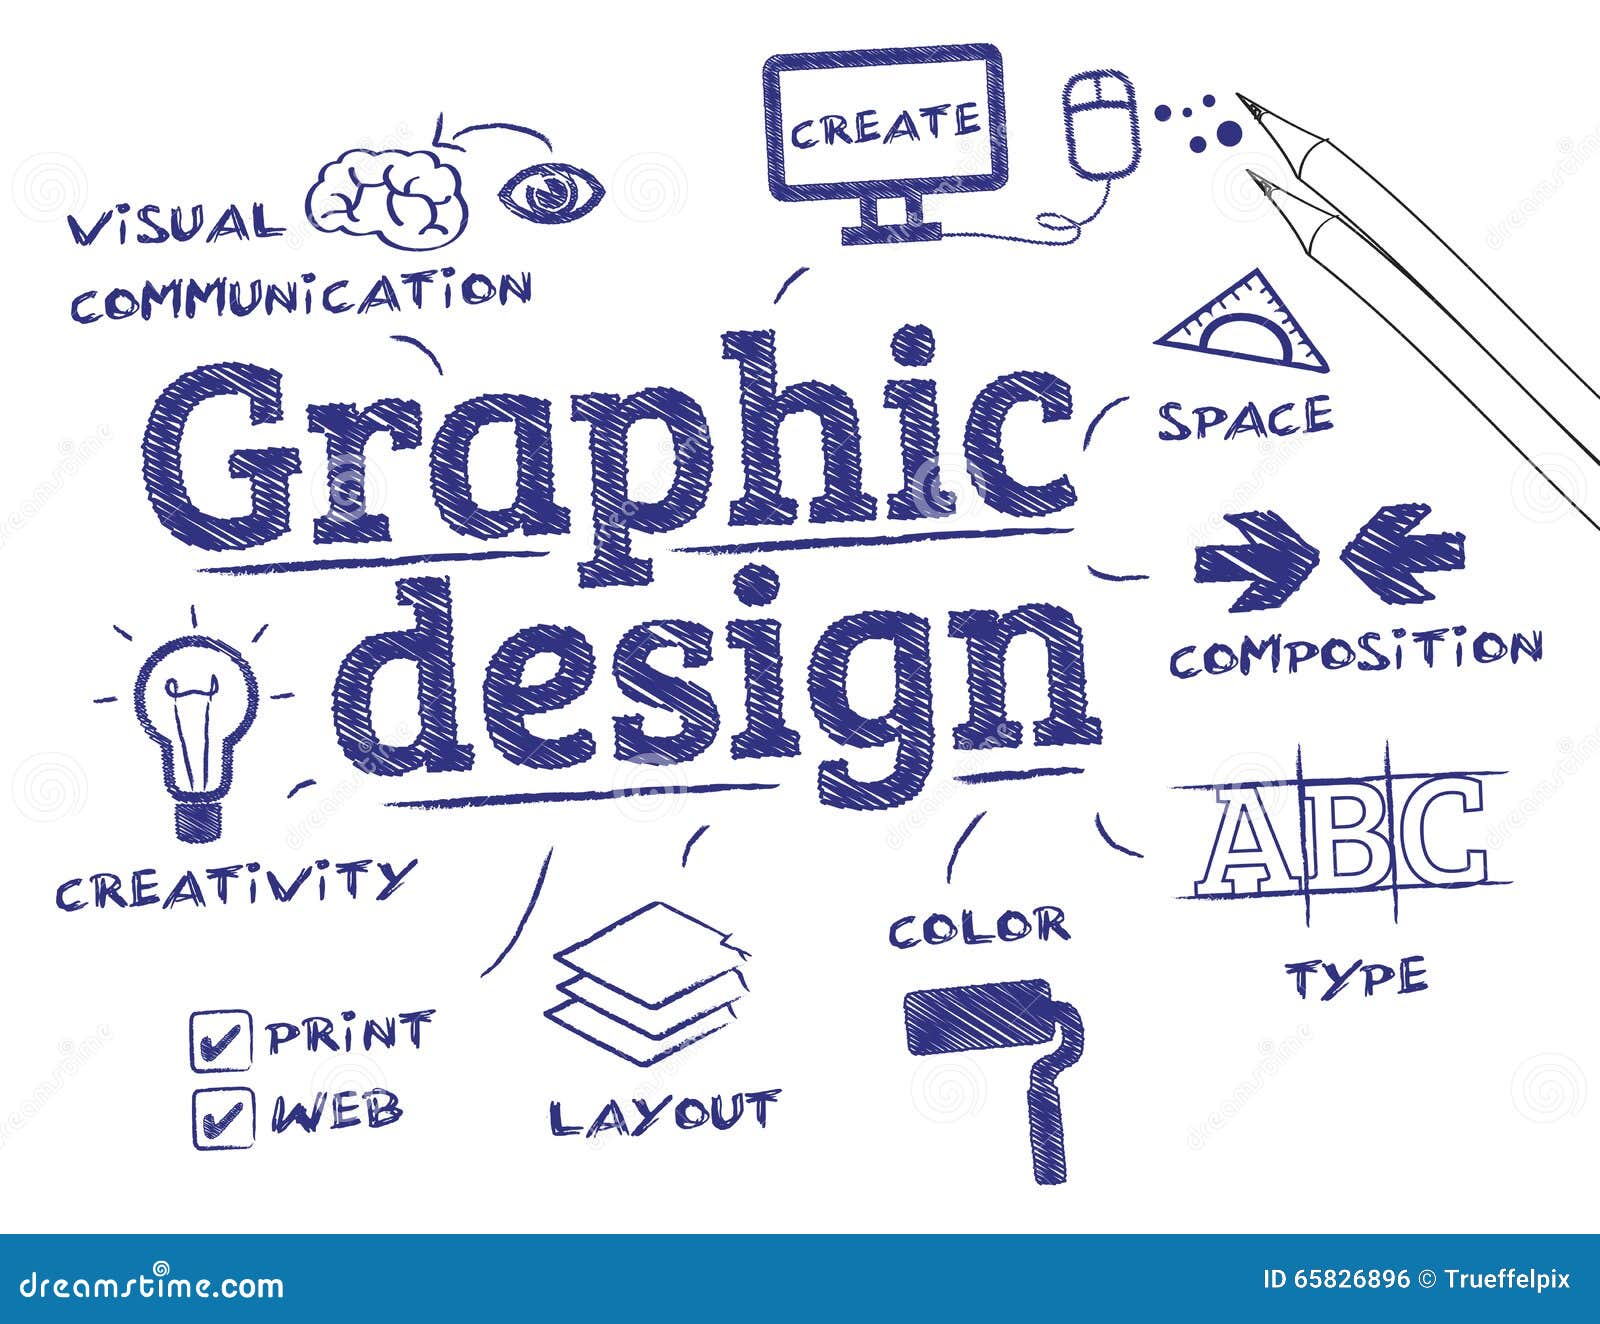 Graphic design concept stock illustration. Illustration of arts - 65826896